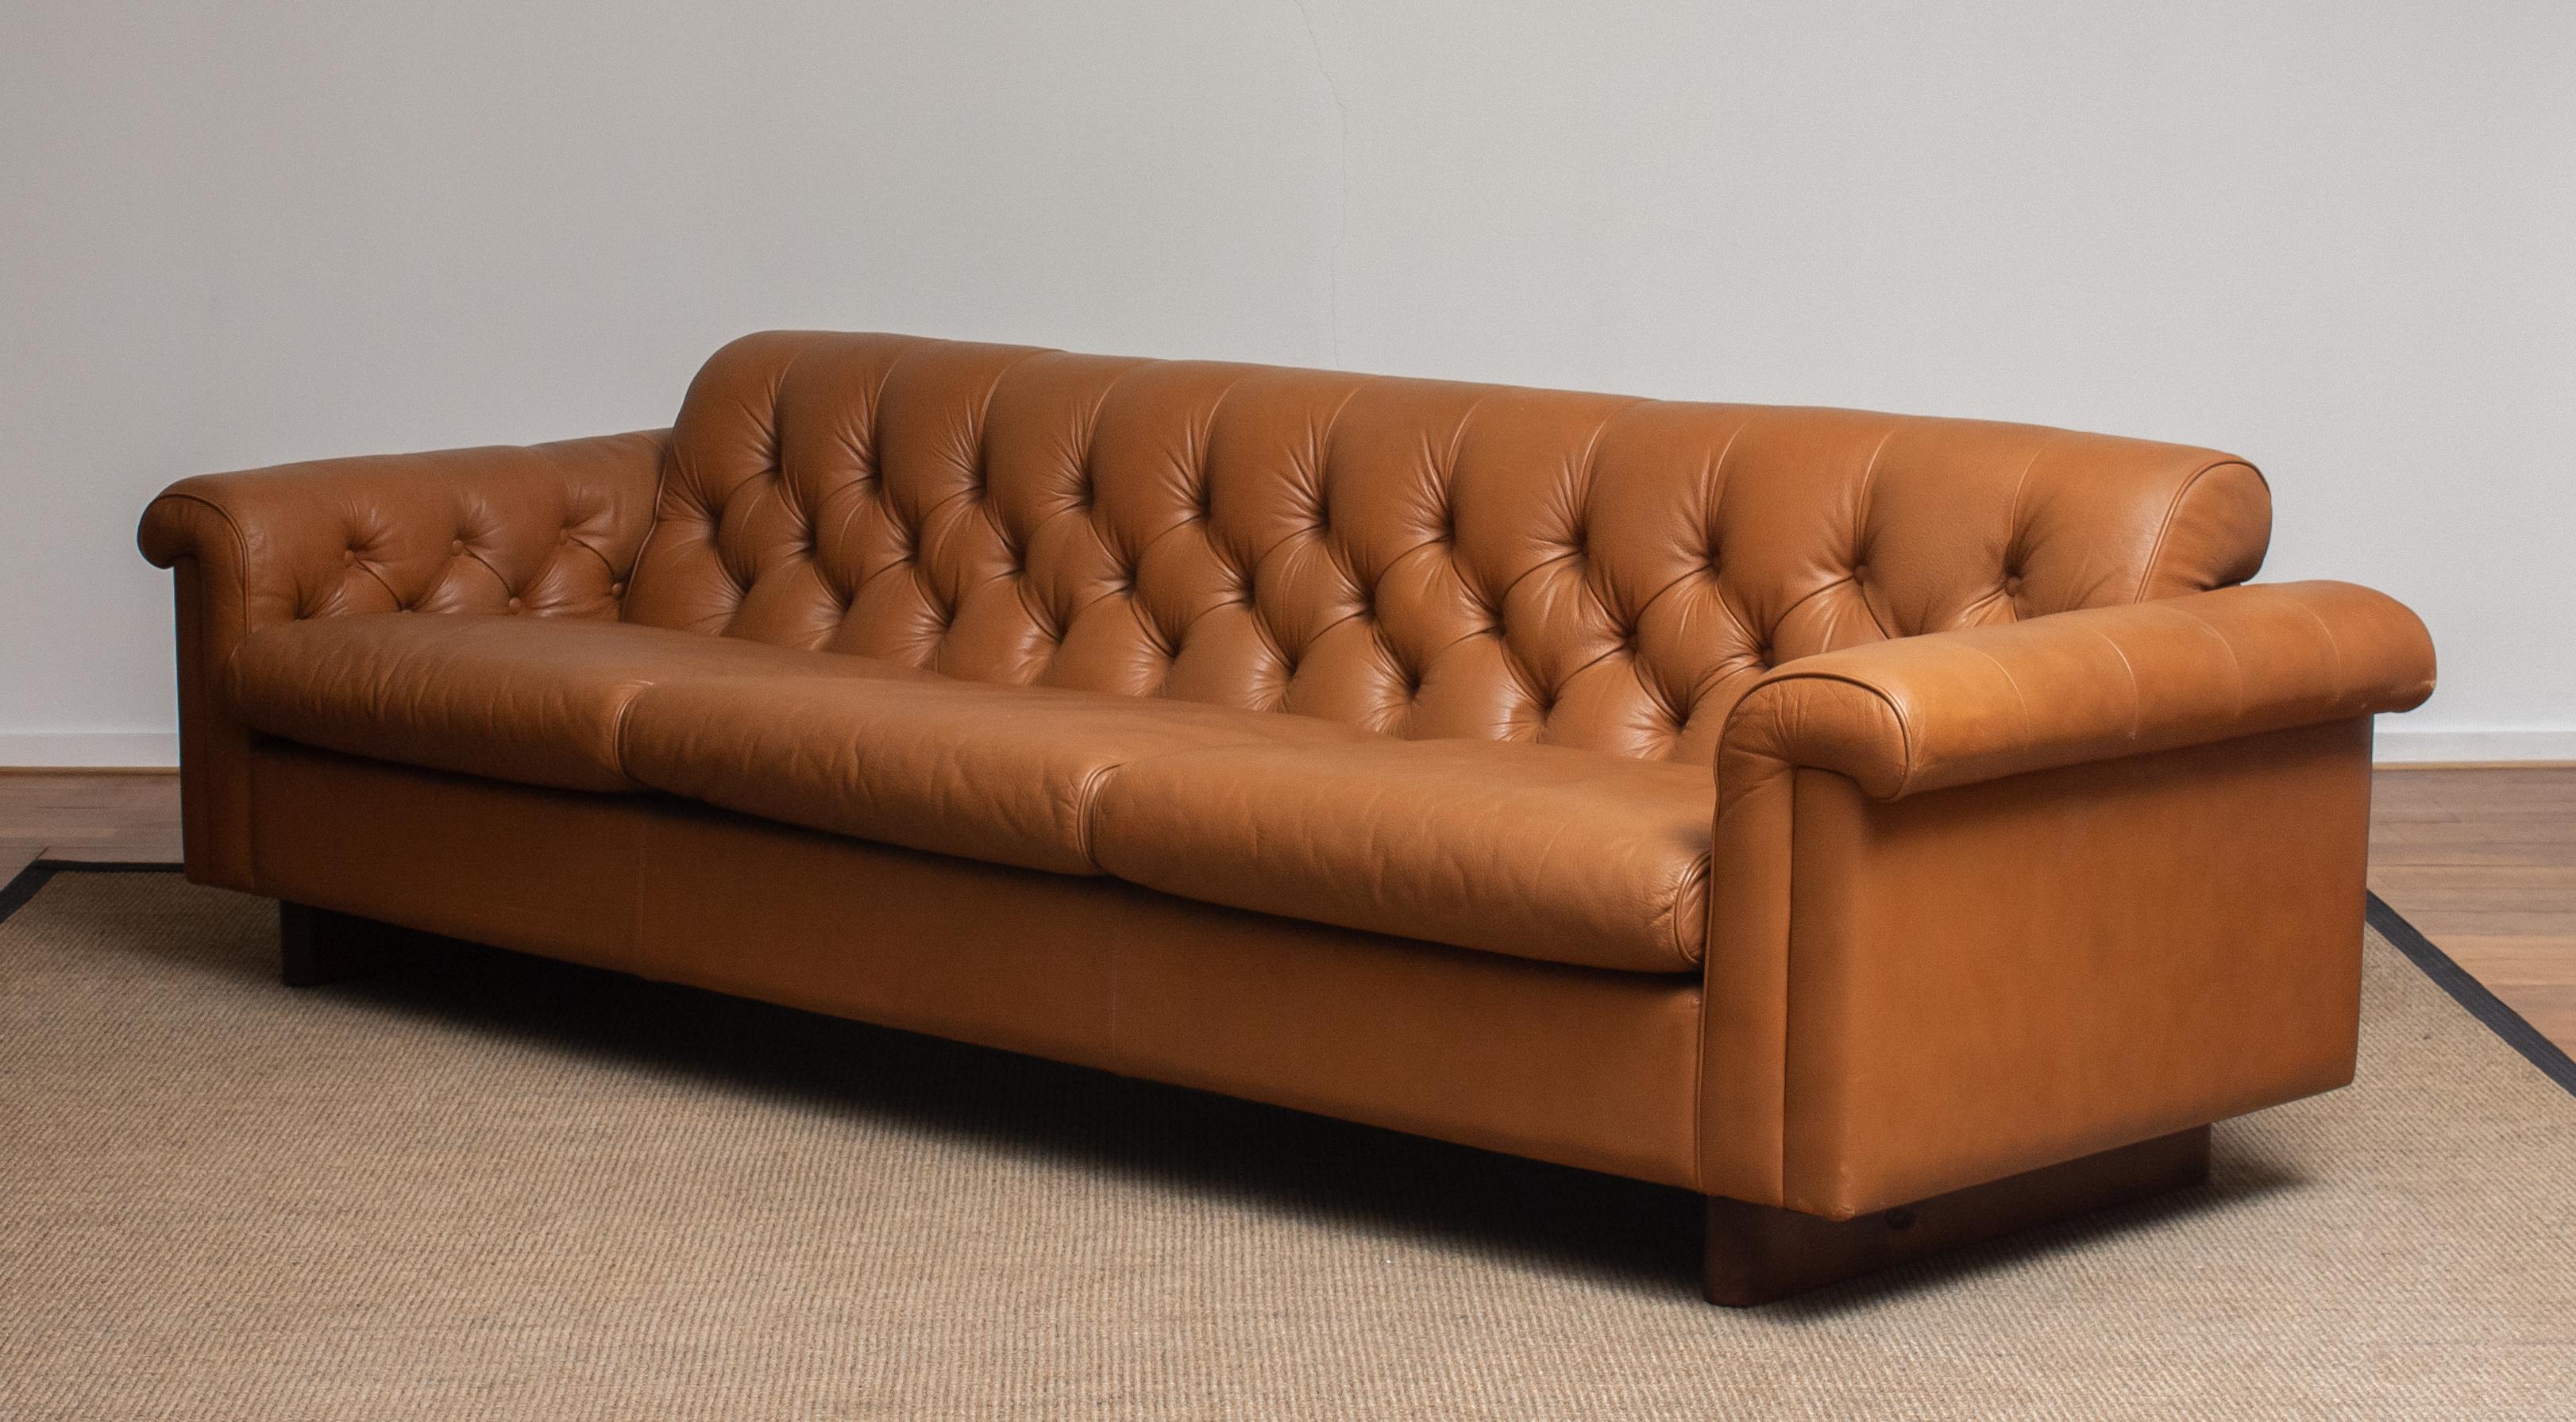 1970's Sofa by Karl Erik Ekselius for JOC Design in Camel Color Tufted Leather 3